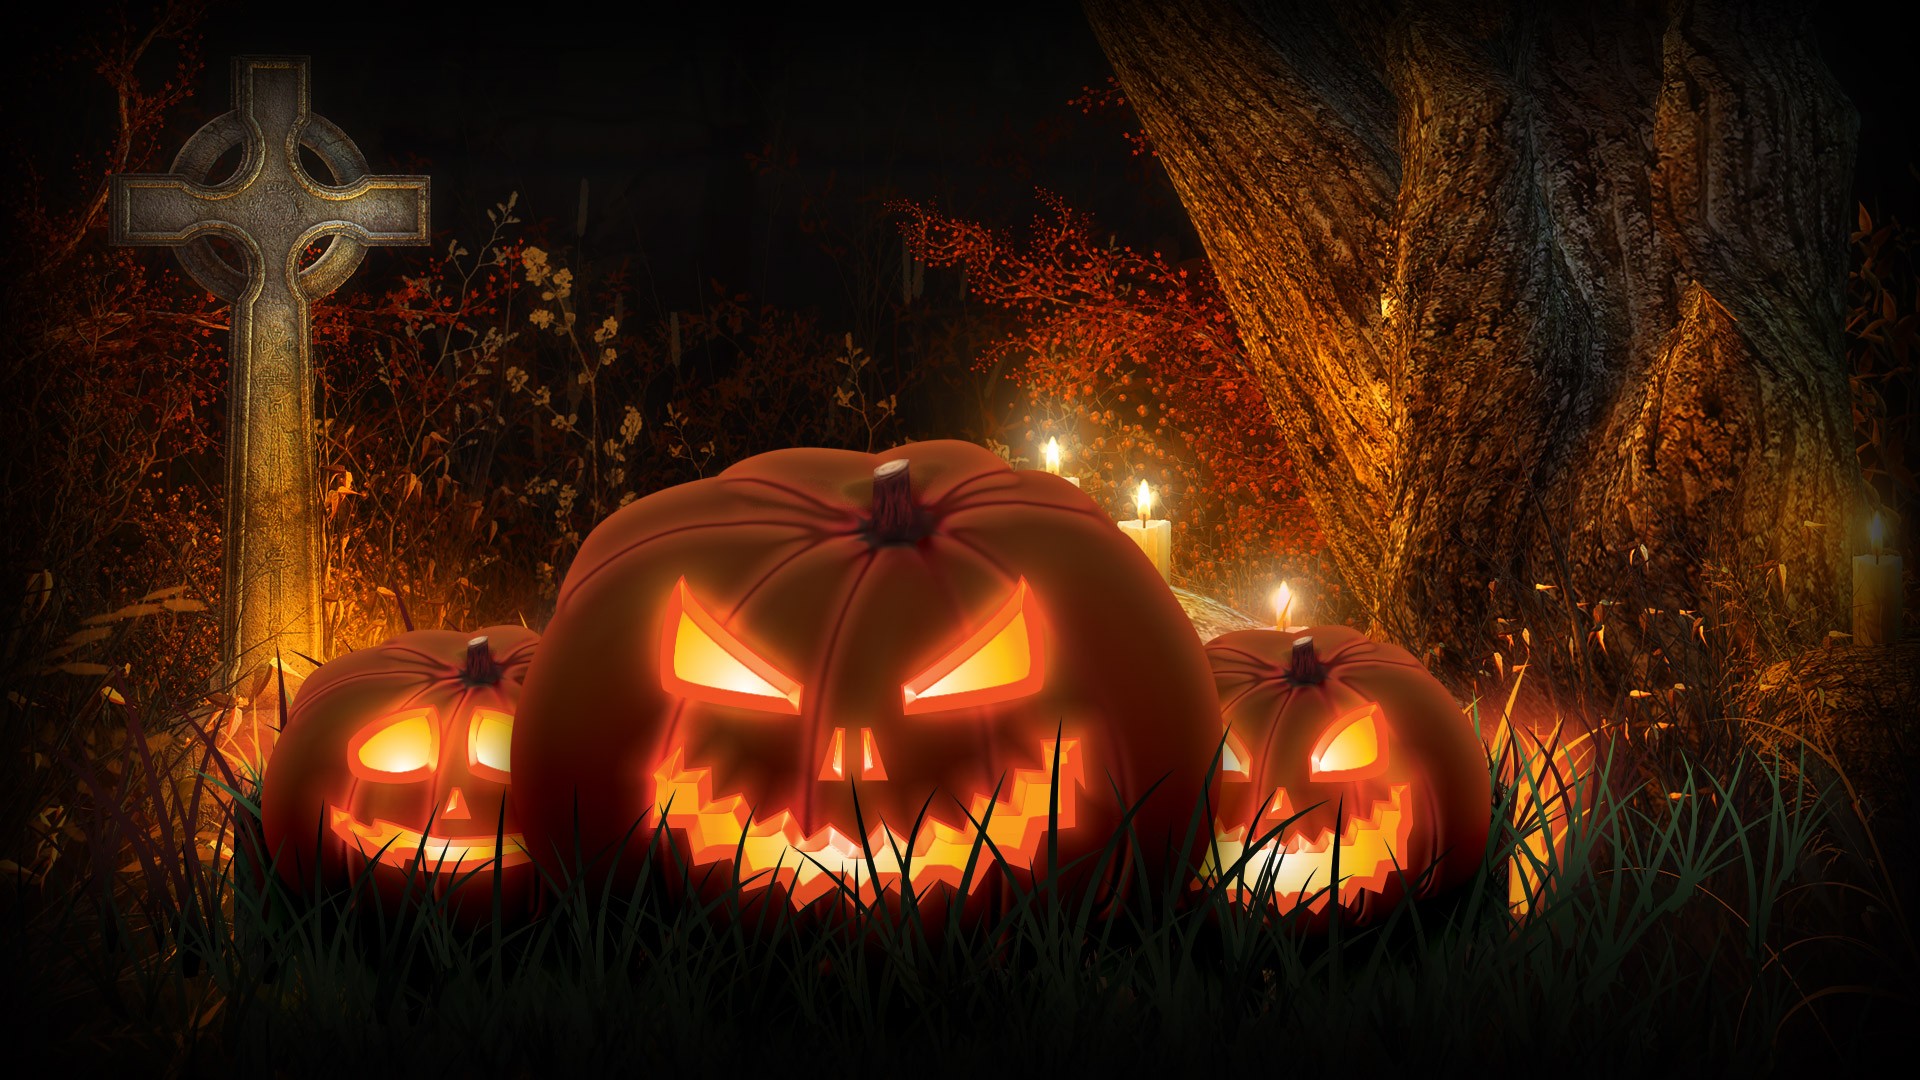  download Halloween scary spooky cemetery pumpkins wallpaper 1920x1080